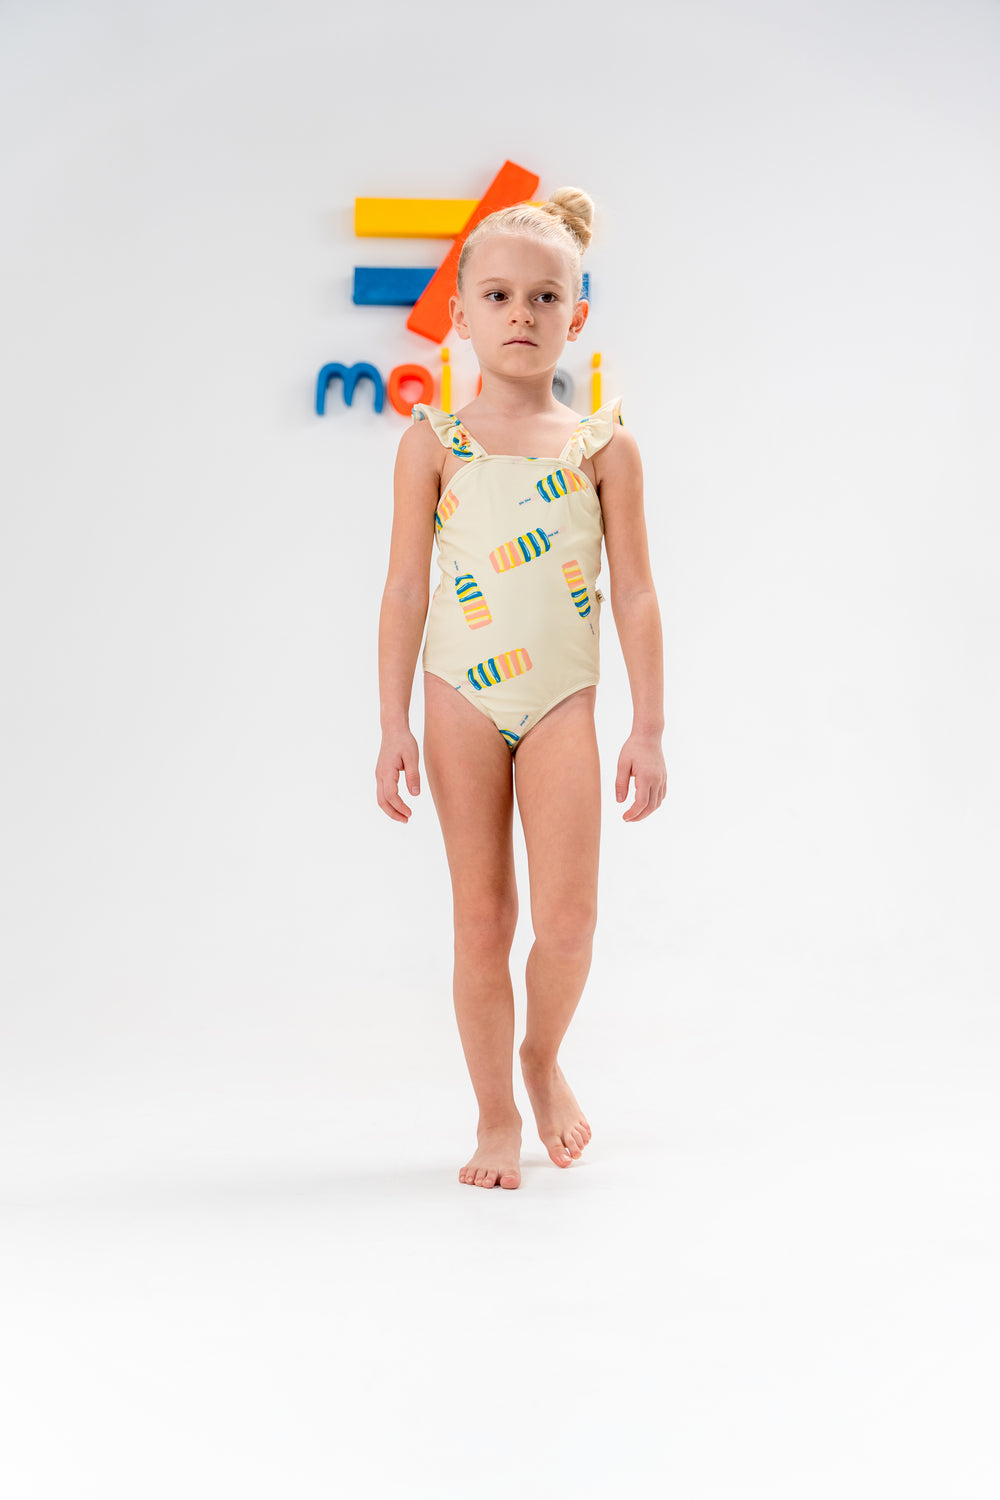 kids-atelier-moi-noi-kid-baby-girl-orange-fig-print-one-piece-swimsuit-mn1105-orange